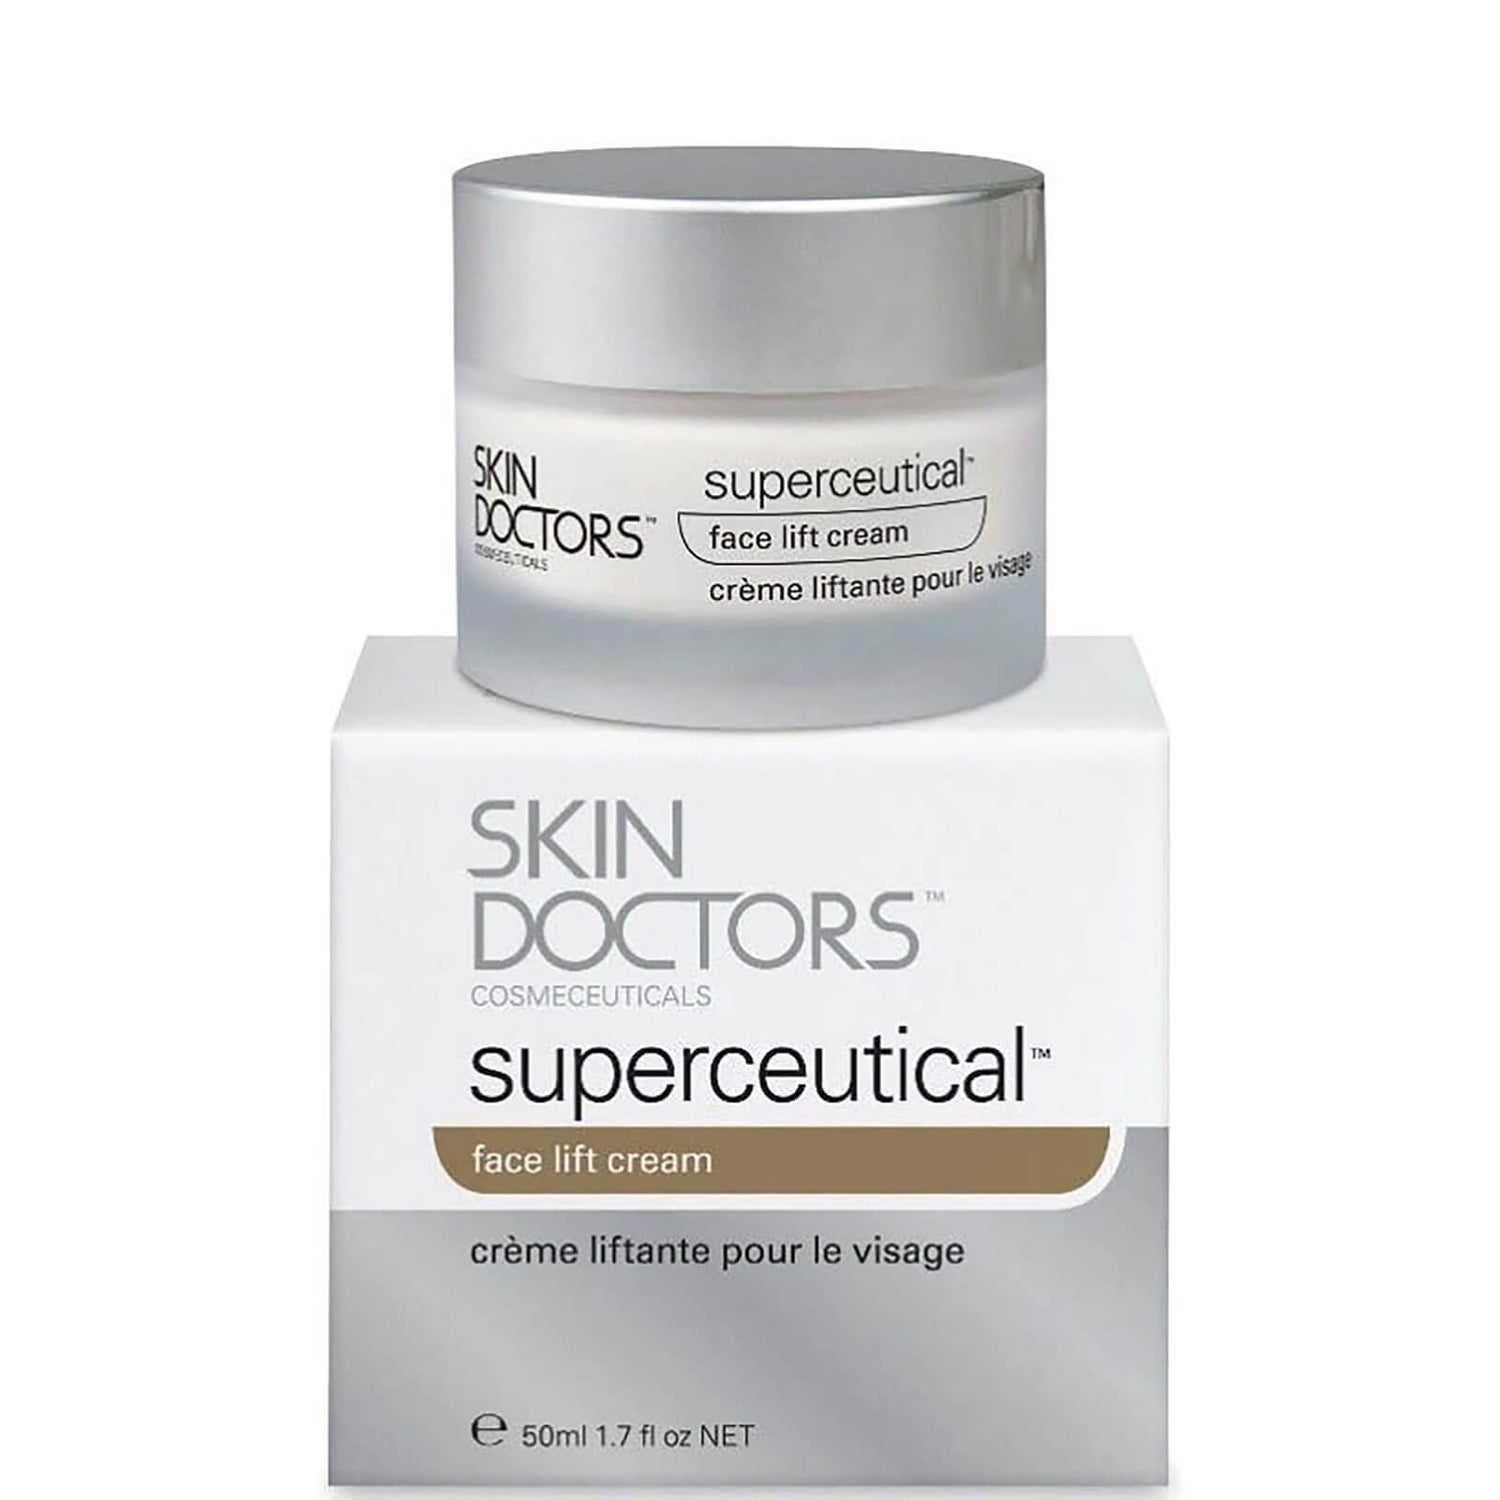 Skin Doctors Superfacelift (50ml)